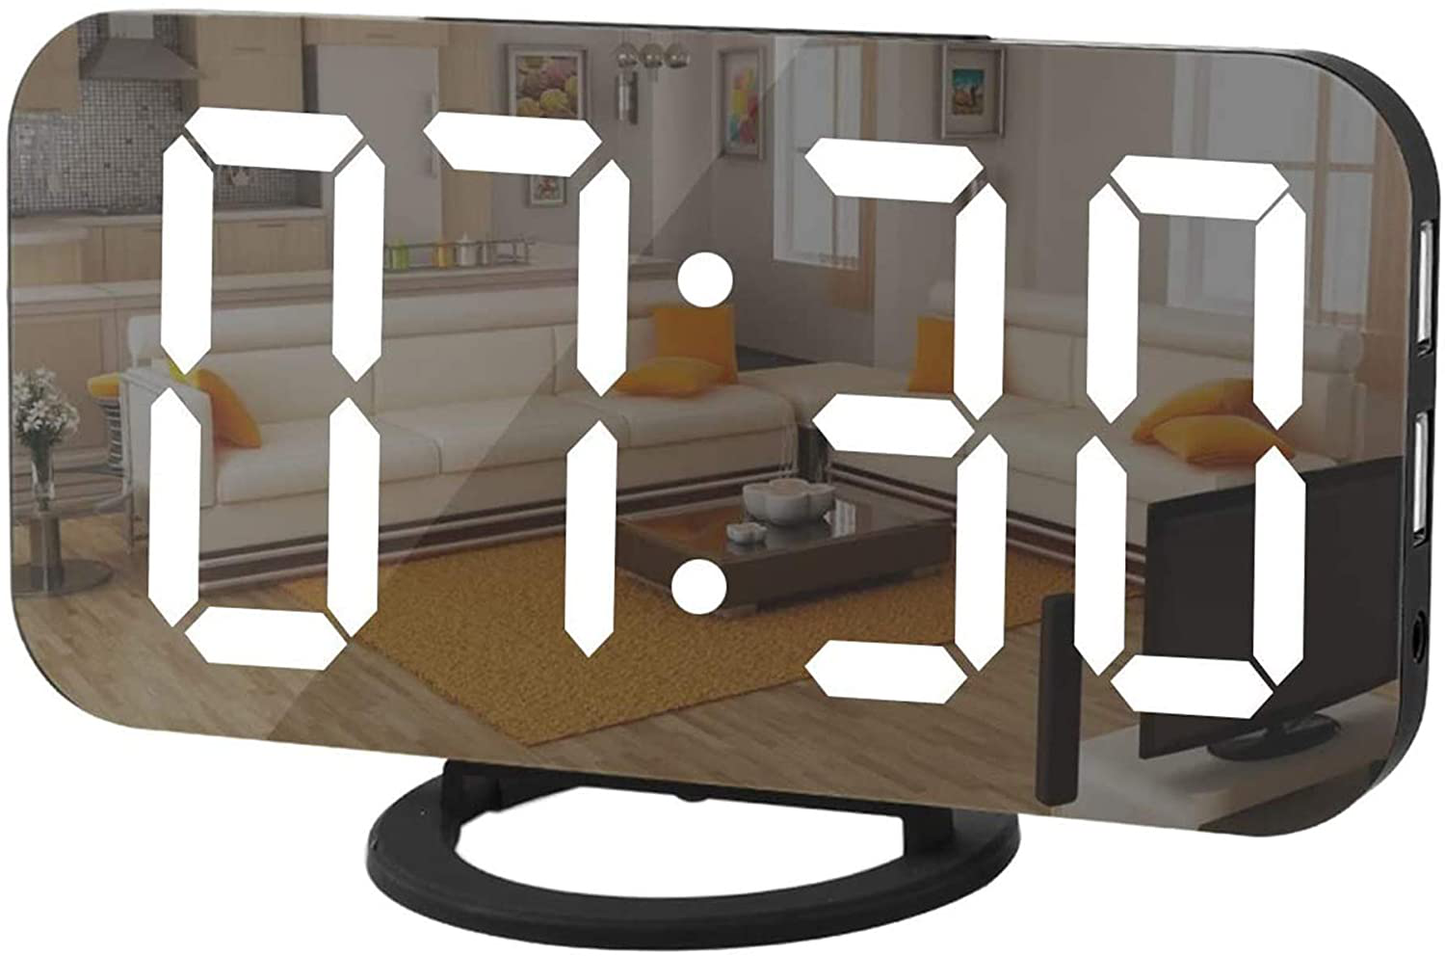 Digital Clock Large Display, LED Alarm Electric Clocks Mirror Surface for Makeup with Diming Mode, 3 Levels Brightness, Dual USB Ports Modern Decoration for Home Bedroom Decor-Black